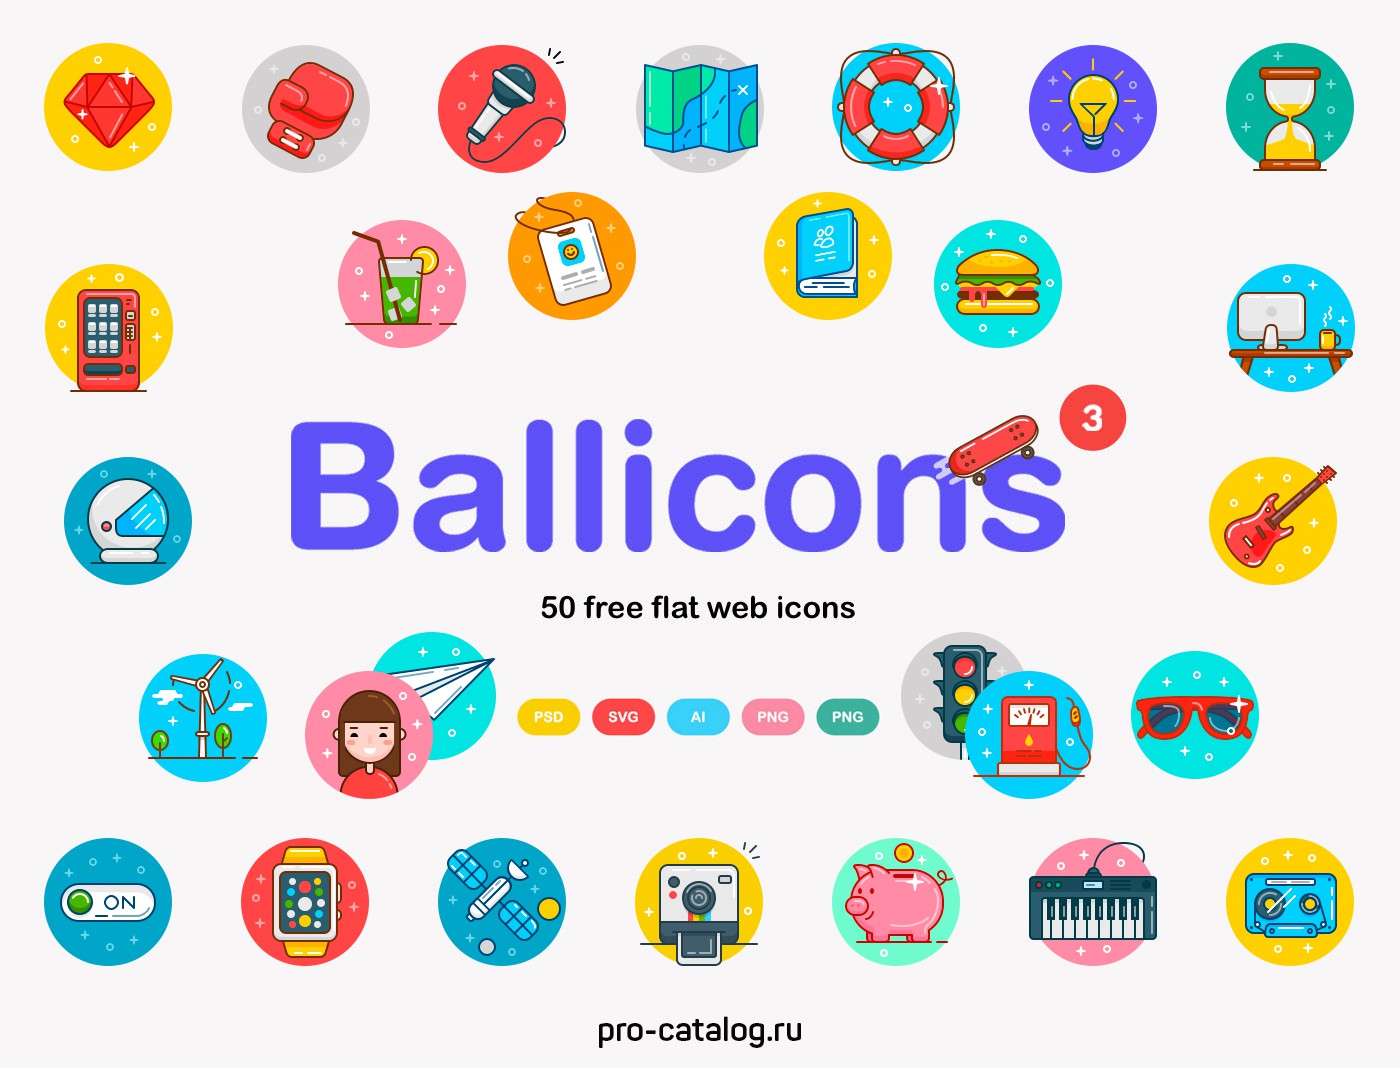 Ballicons 3 - 50 free flat web icons